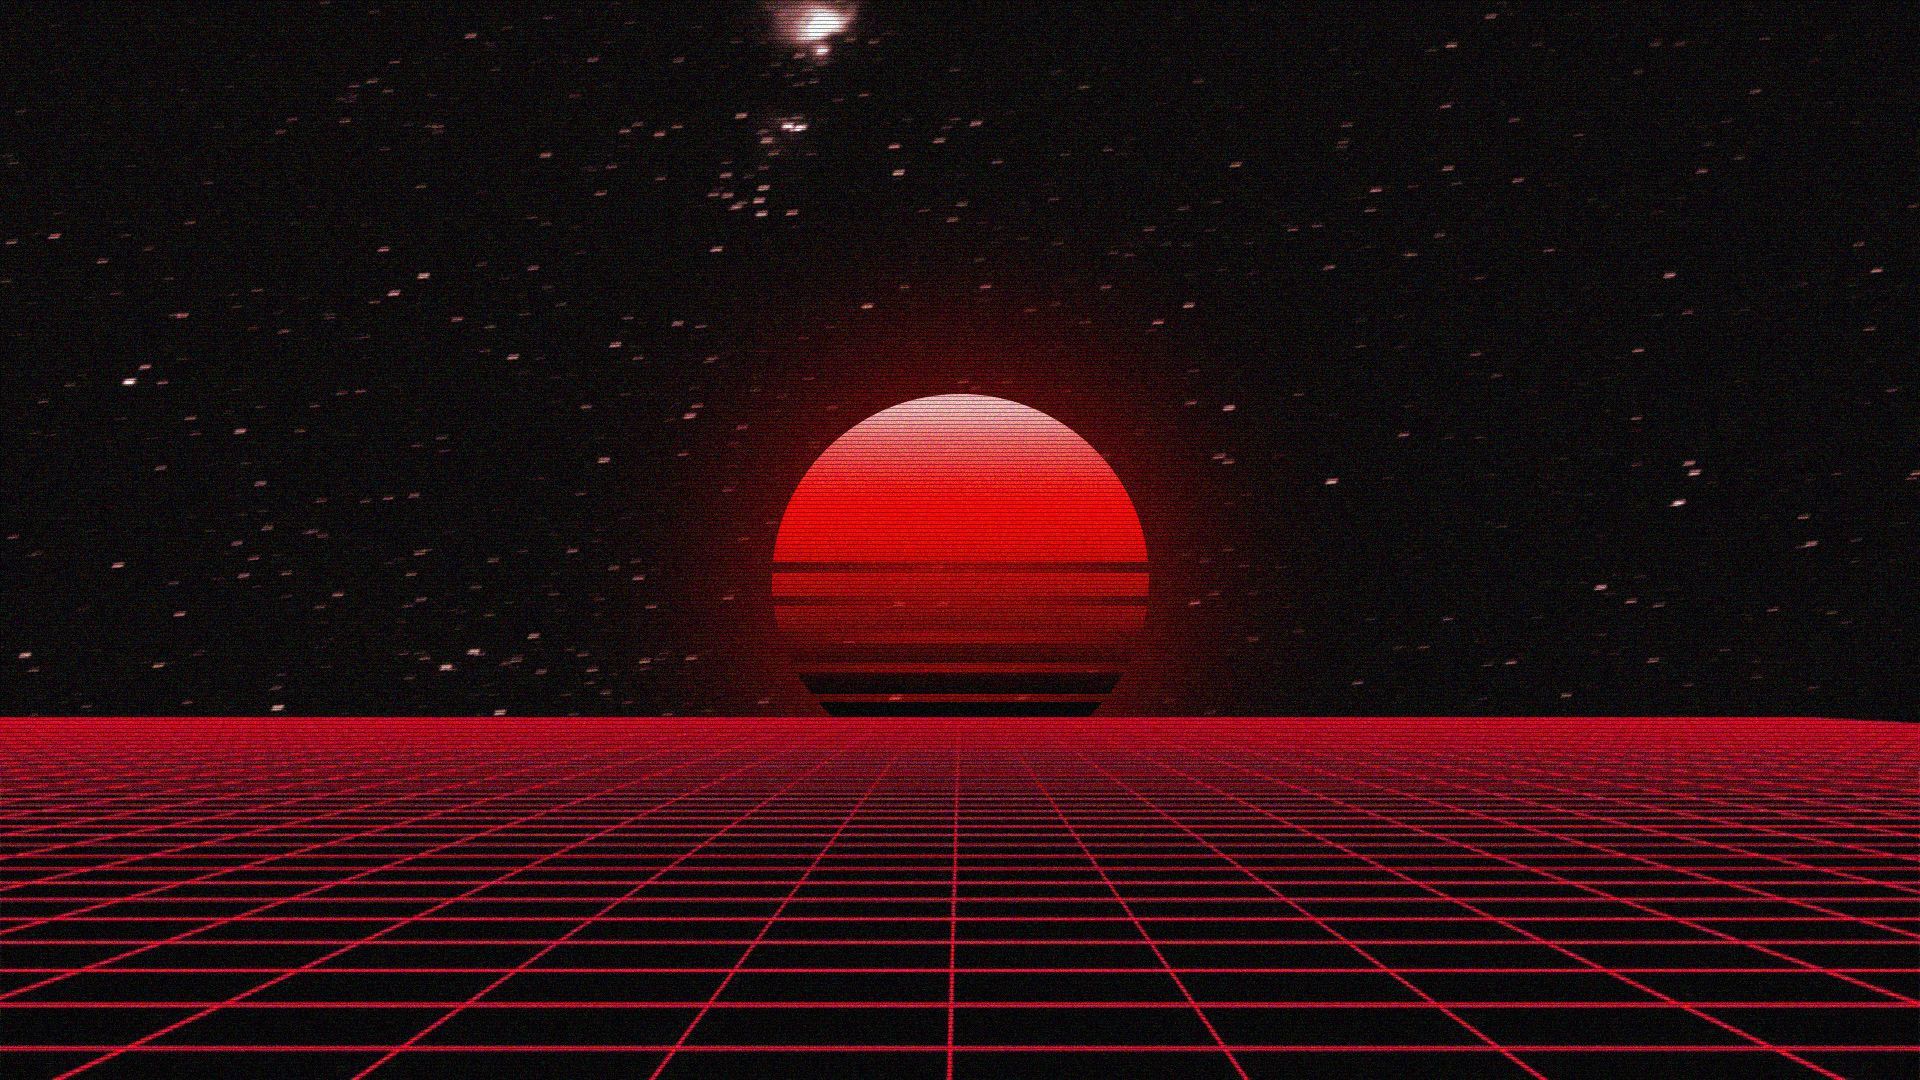 A red and black image of an egg - Dark vaporwave